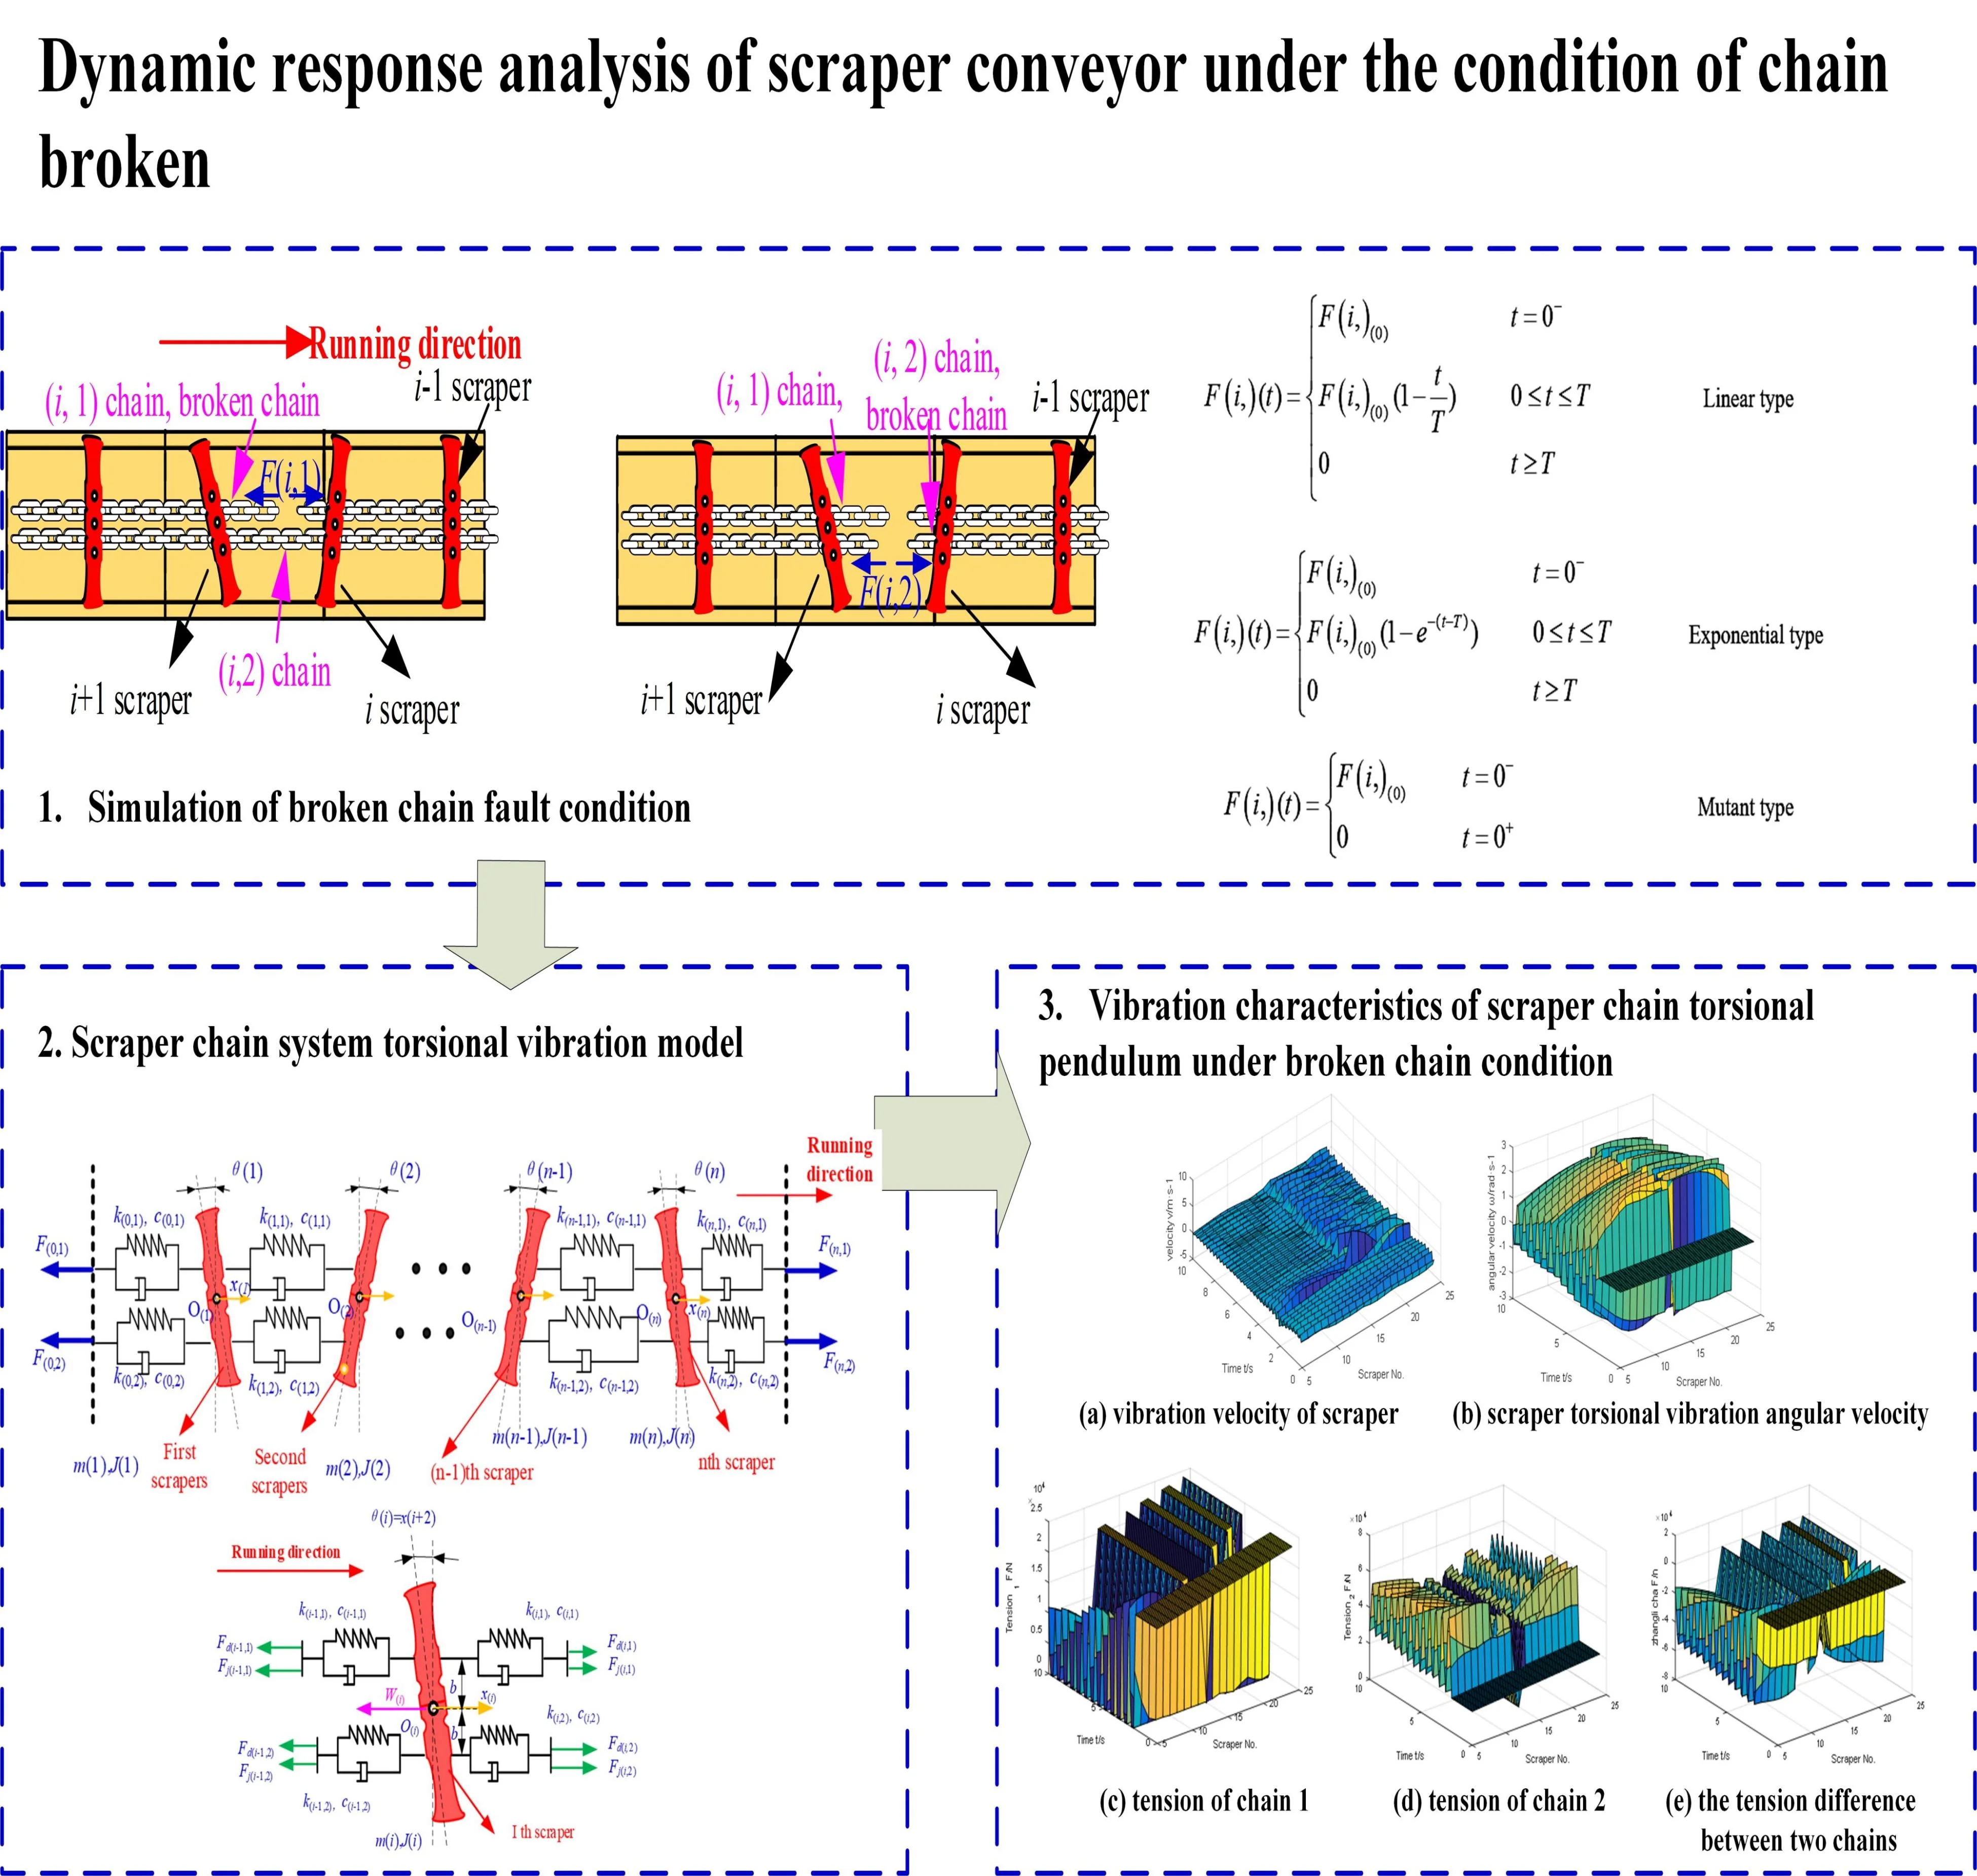 Dynamic response analysis of scraper conveyor under the condition of chain broken